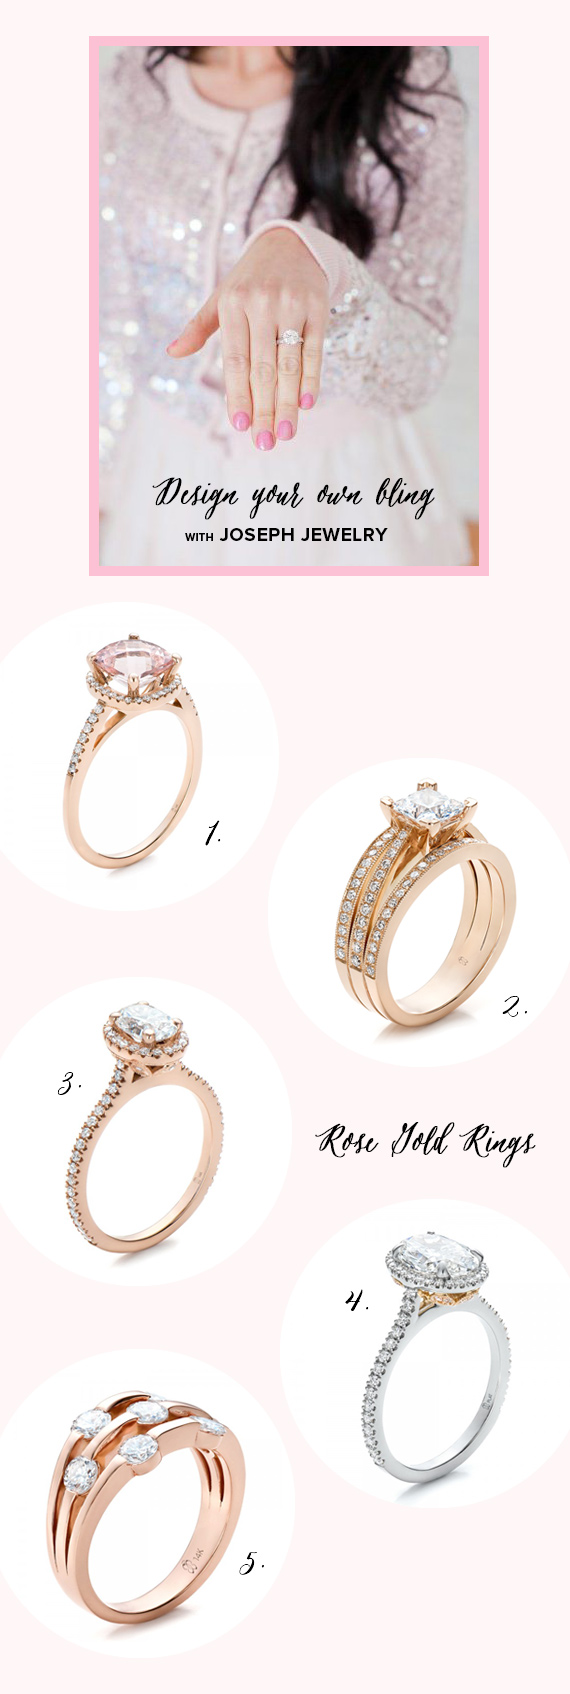 rose gold wedding rings by joseph jewelry